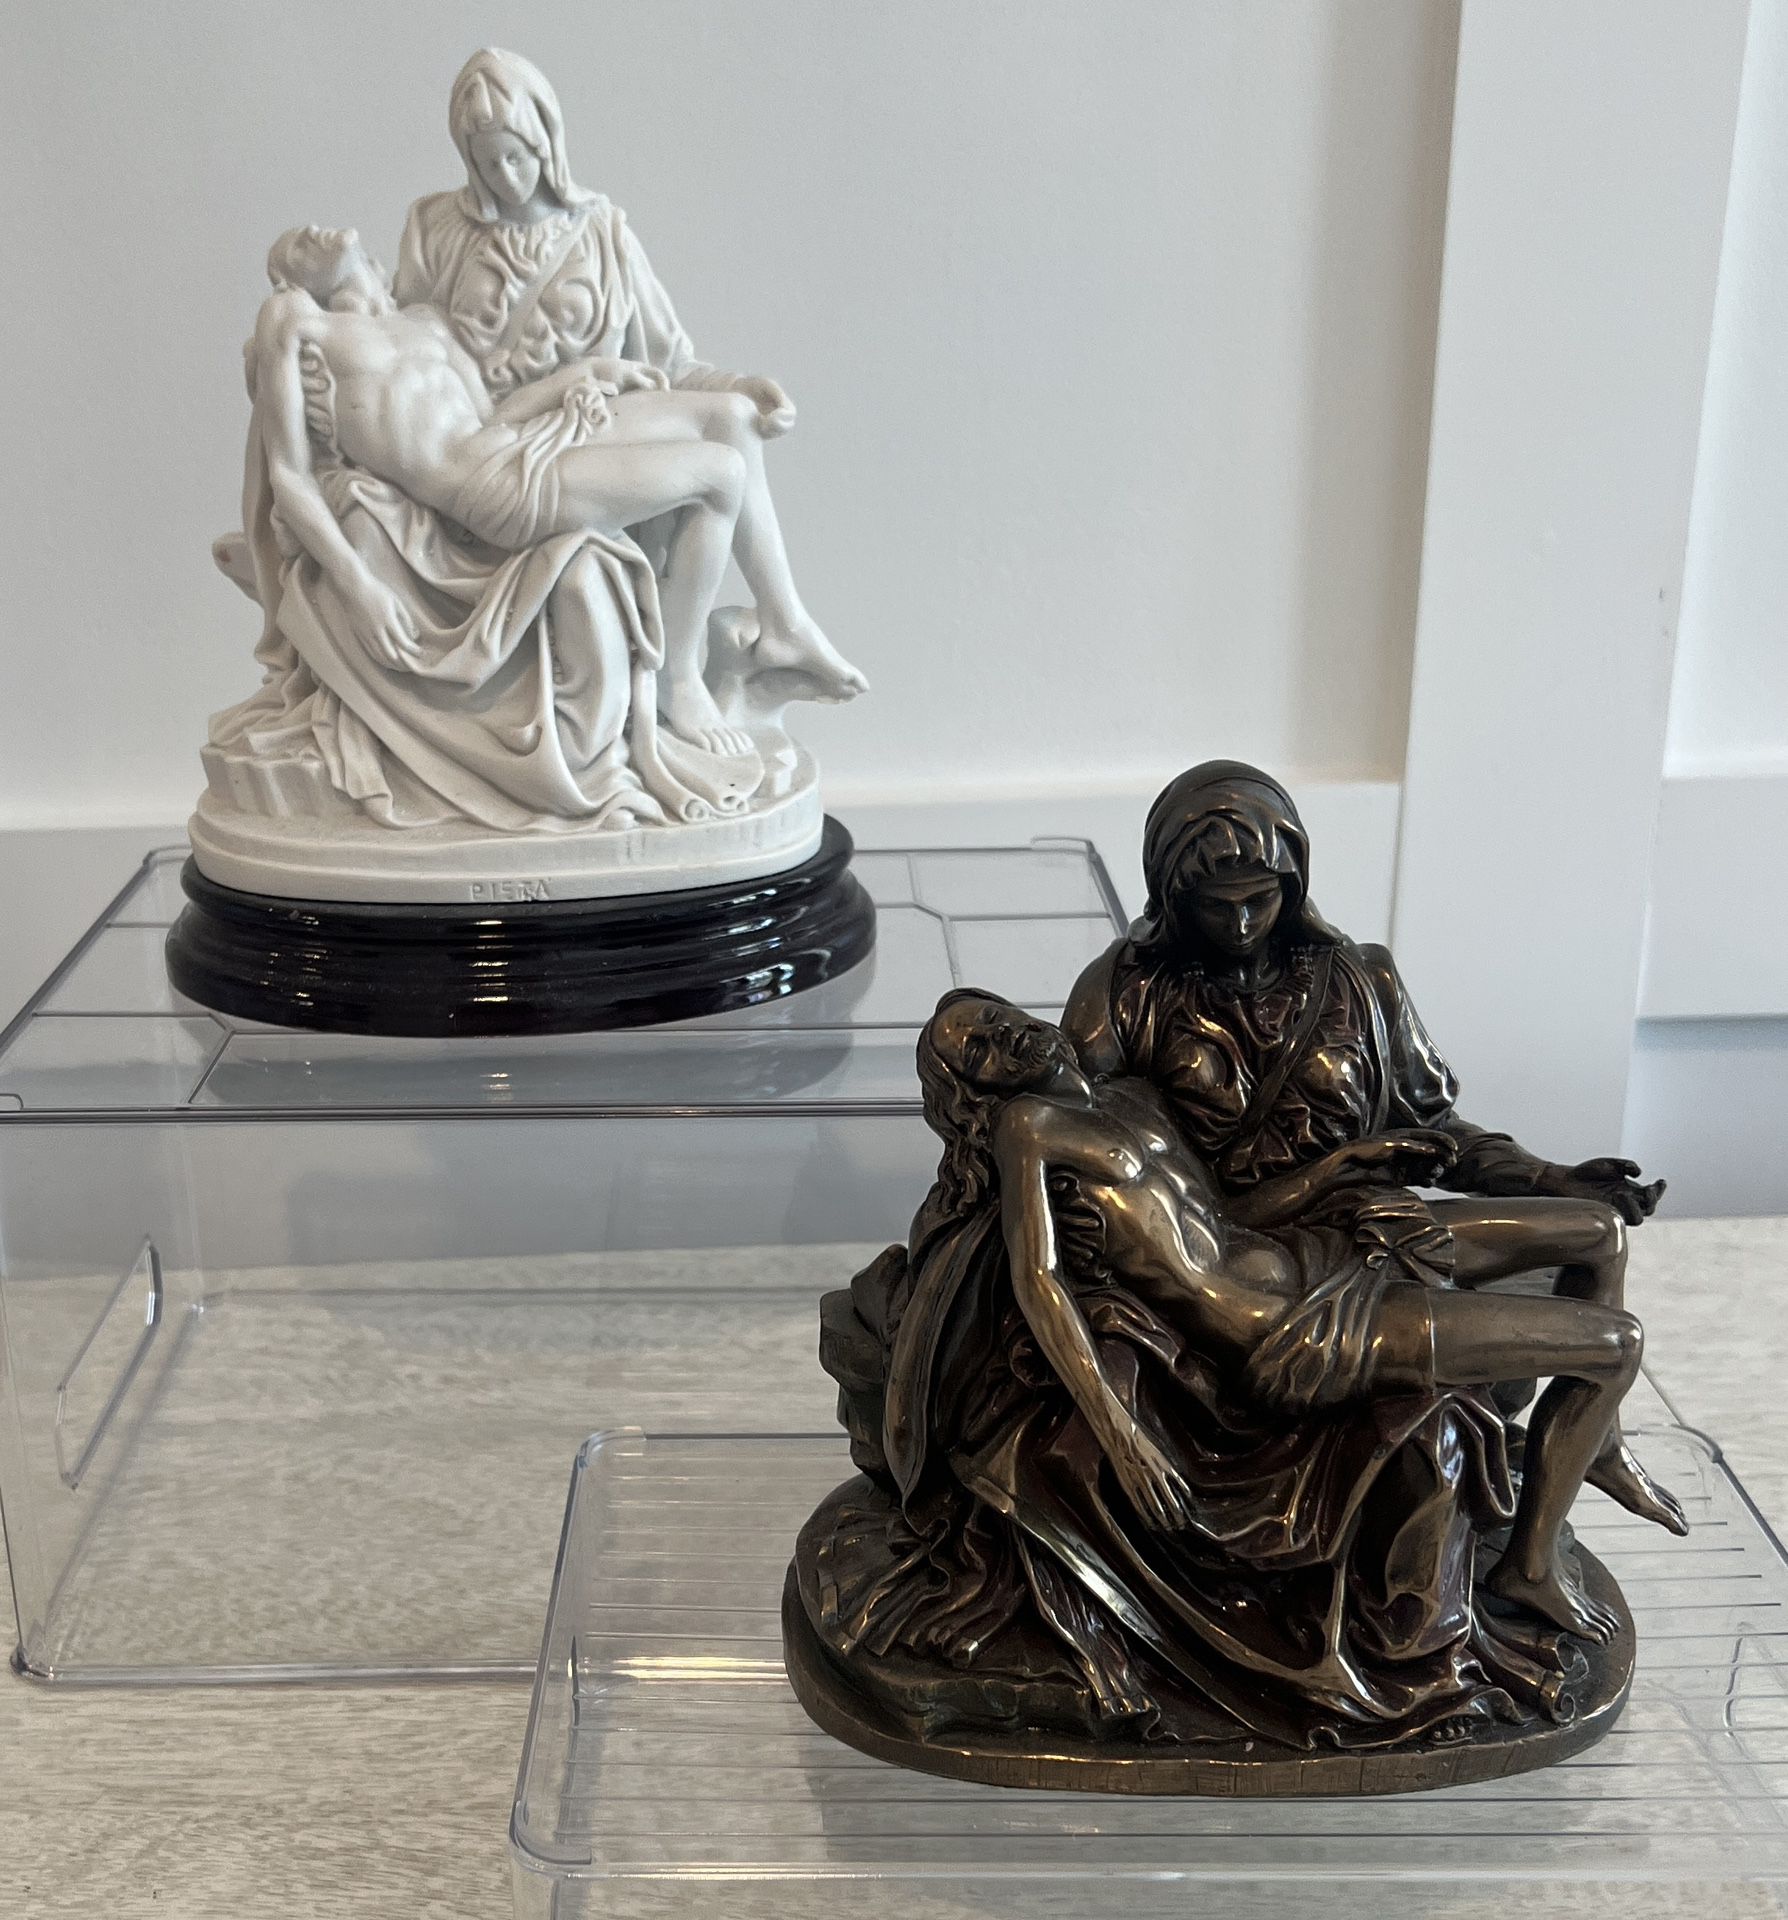 2 Pieta sculptures Statue Figurines - Mary and Jesus 